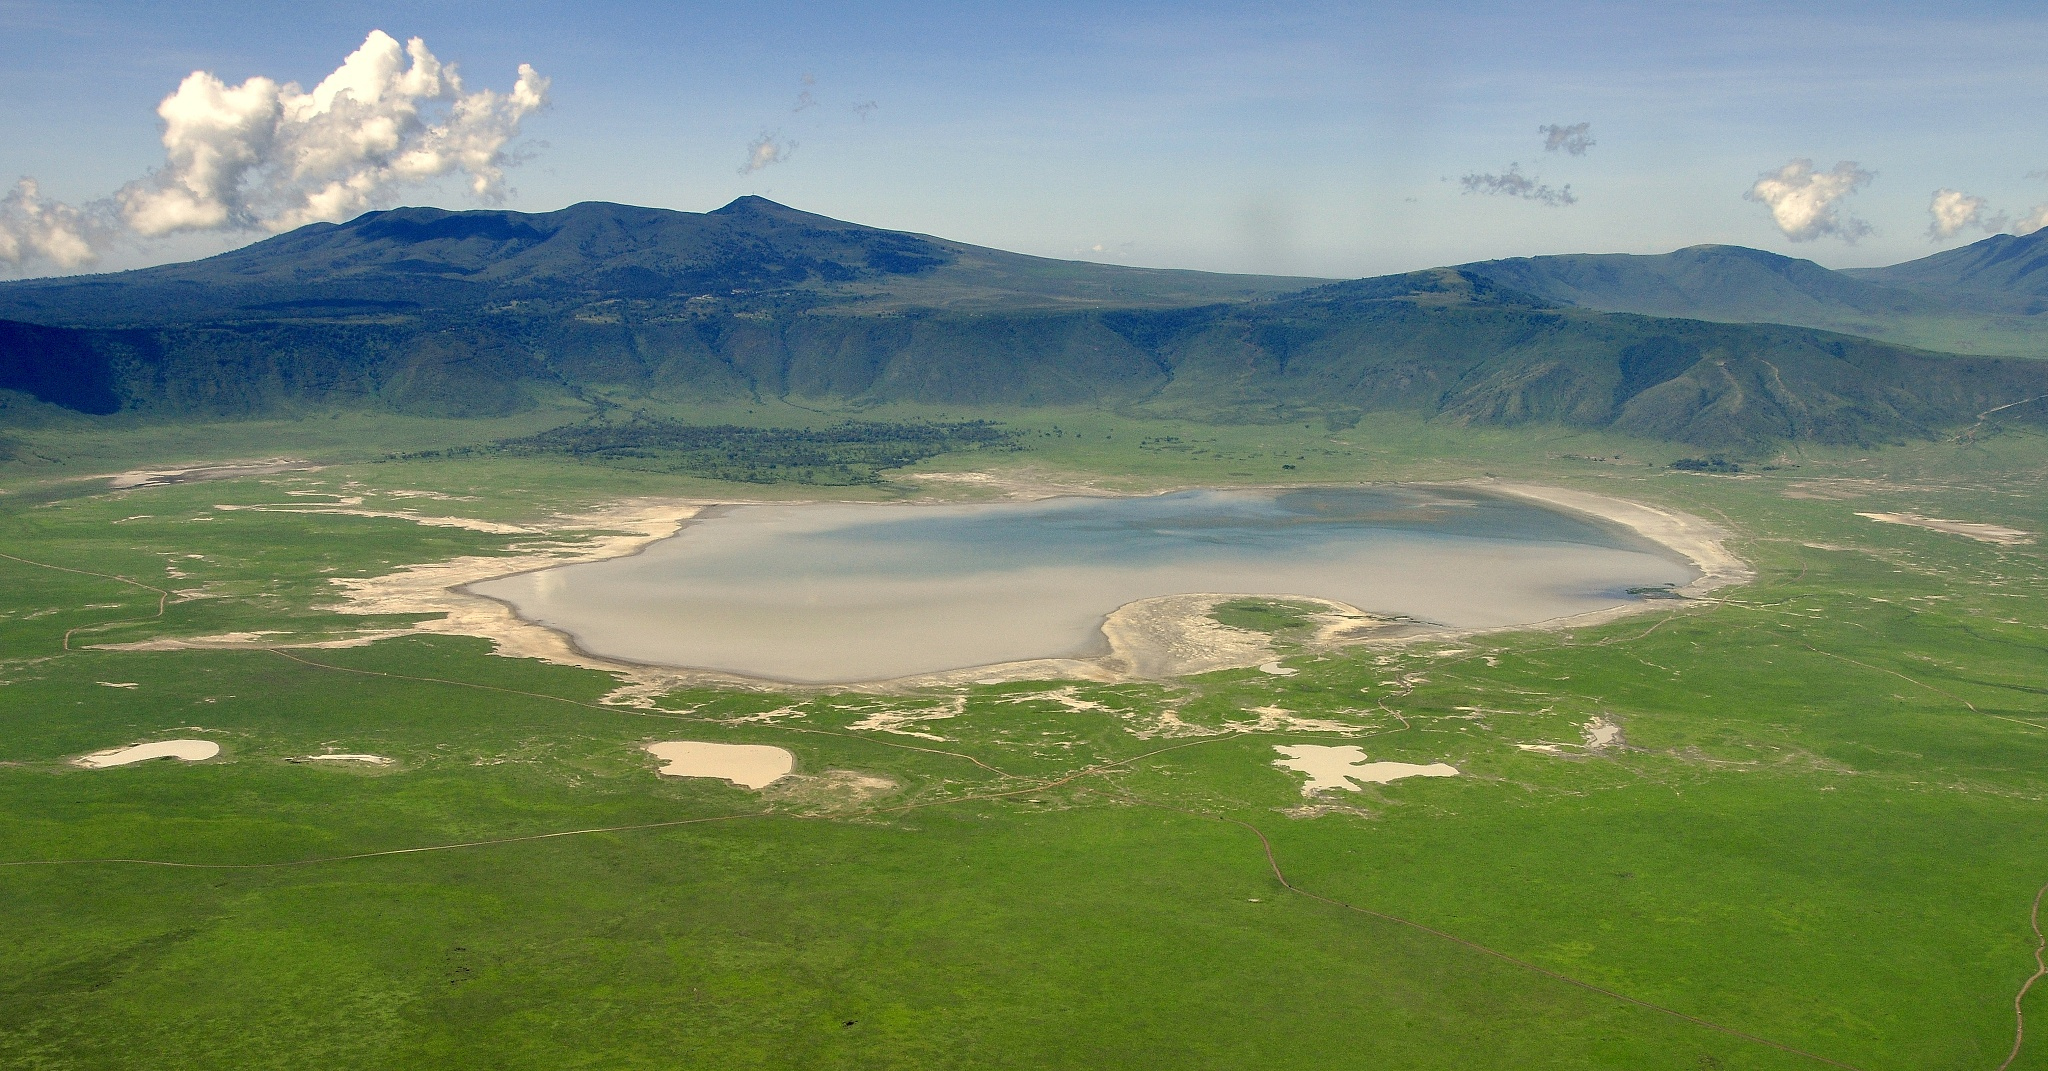 Ngorongoro-Crater